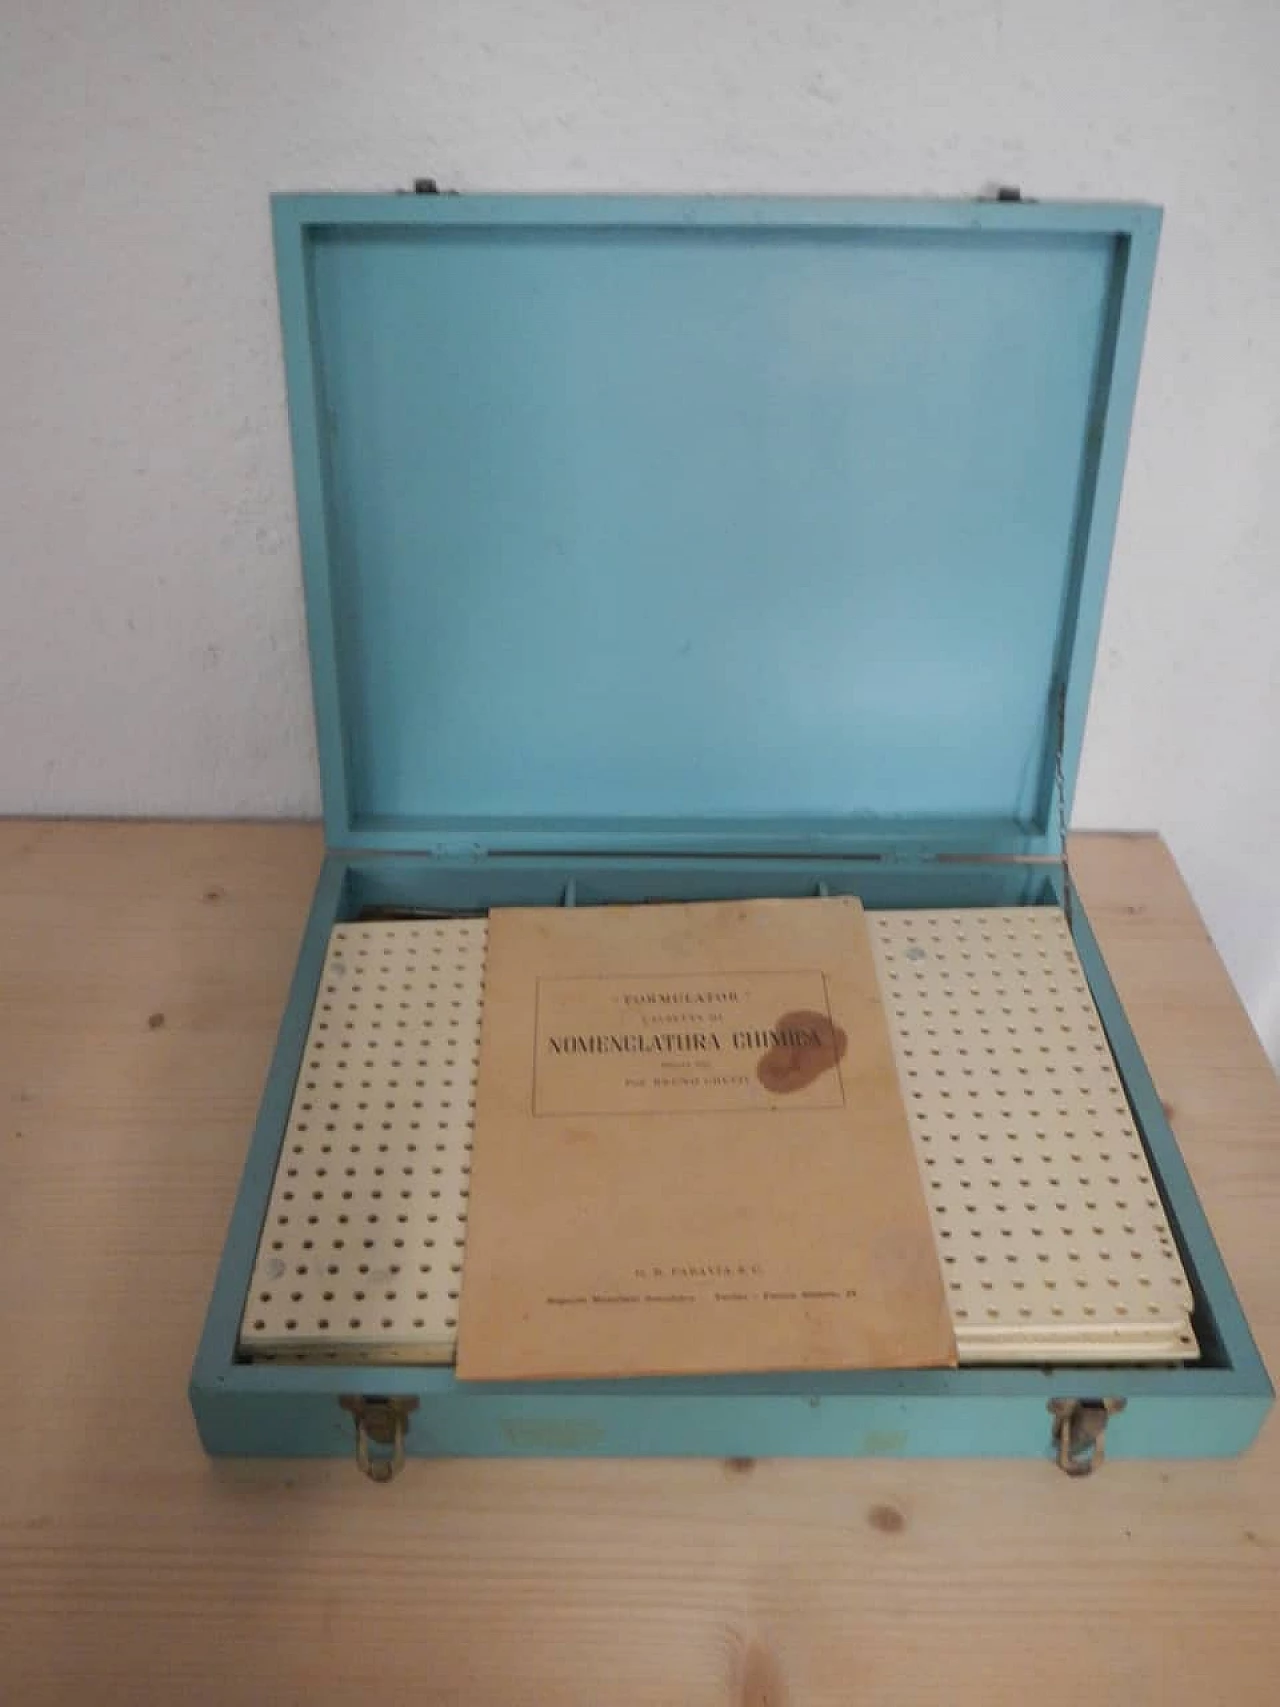 Formulator chemical nomenclature box for Paravia, 1948 2